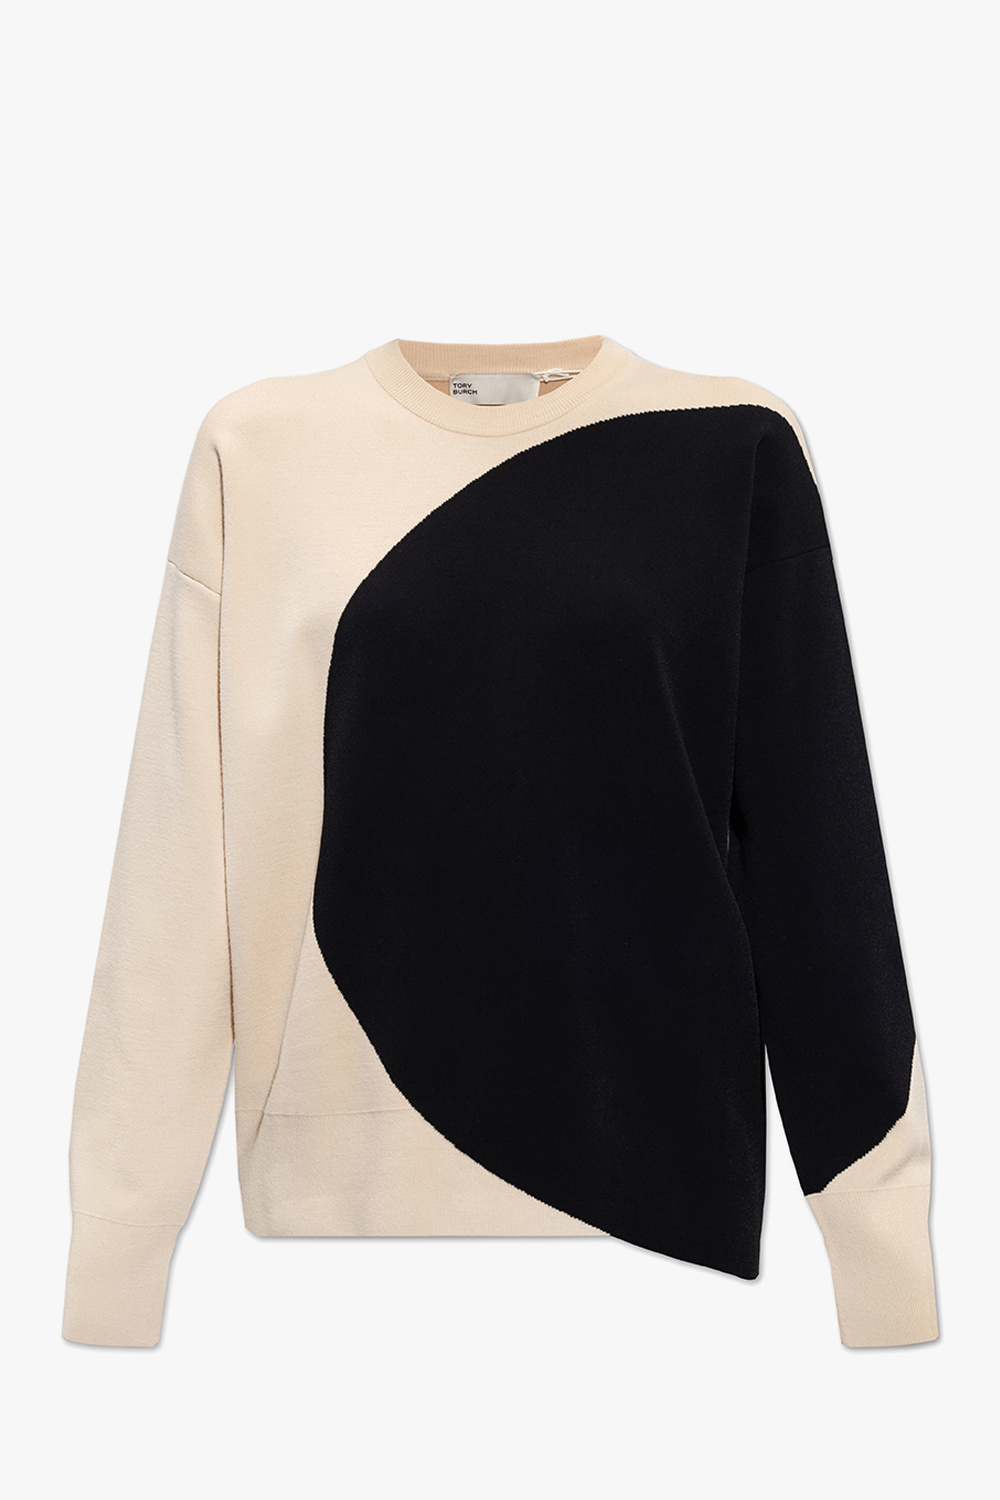 Tory Burch Crewneck sweater | Women's Clothing | Vitkac